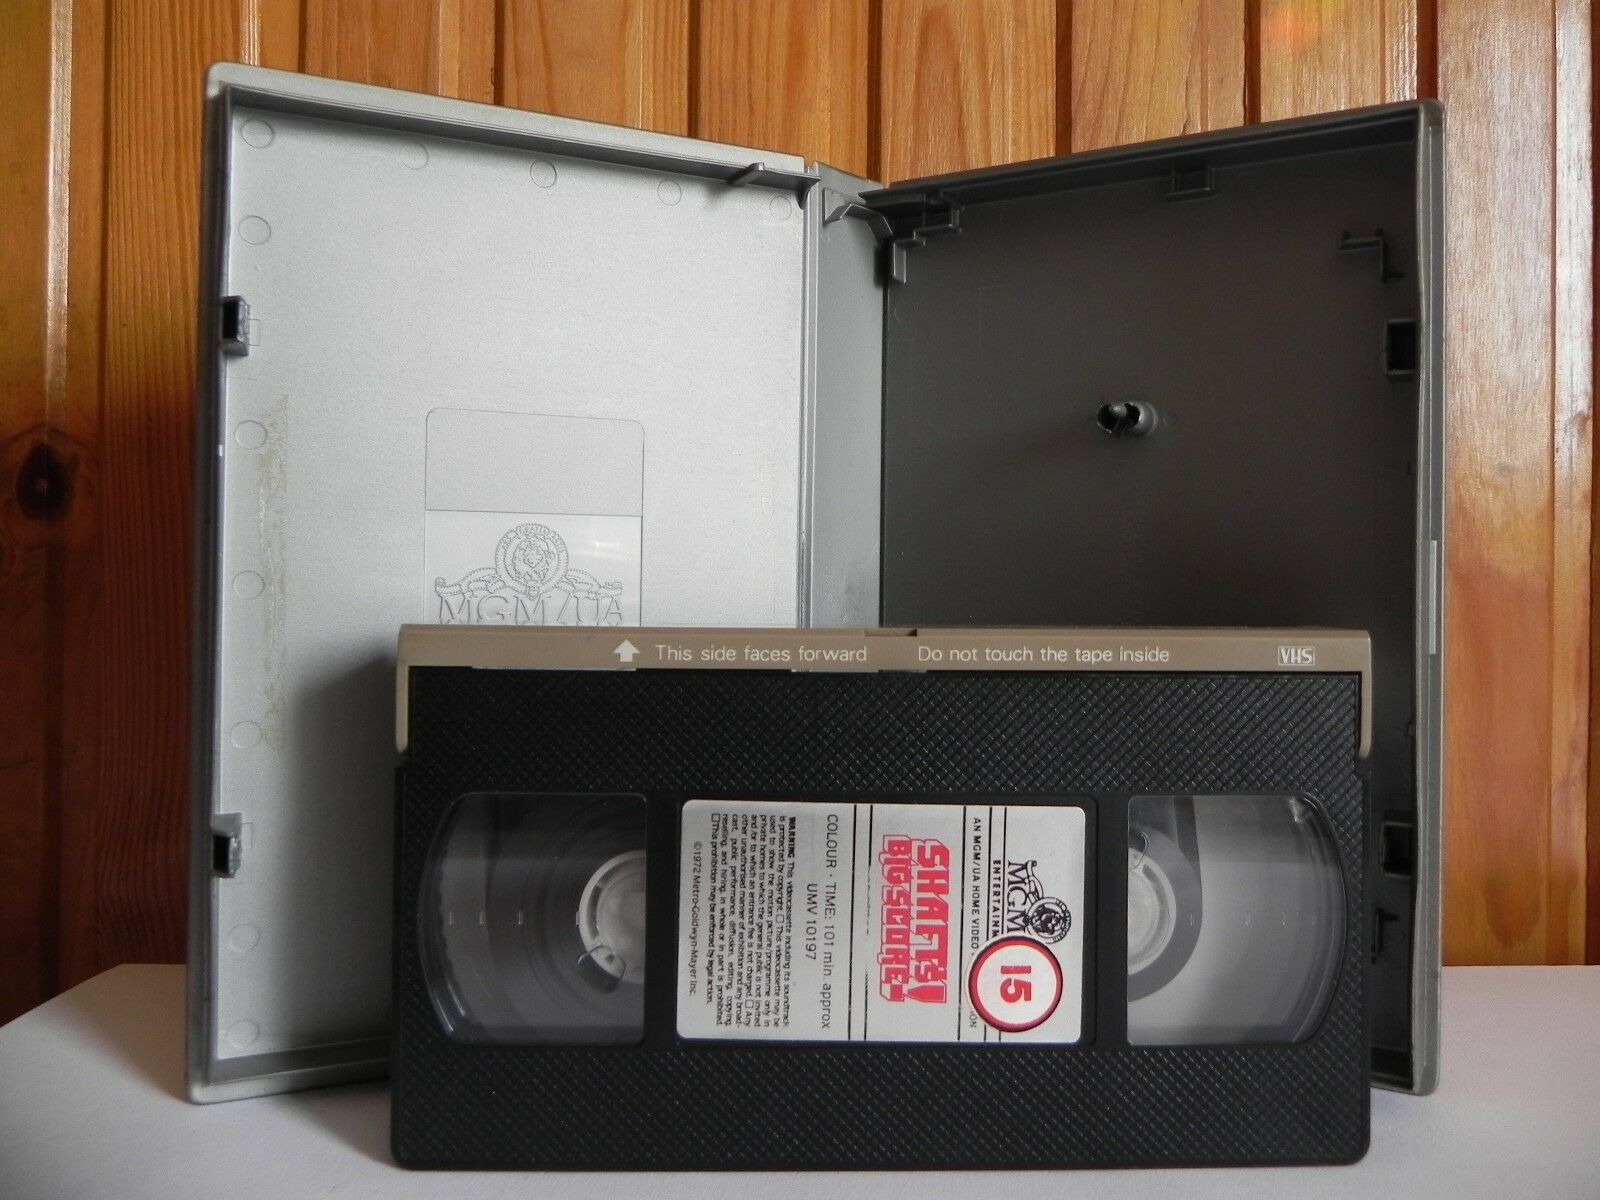 Shaft's Big Score - MGM/UA - Action - Roundtree - Pre-Cert - Large Box - VHS-